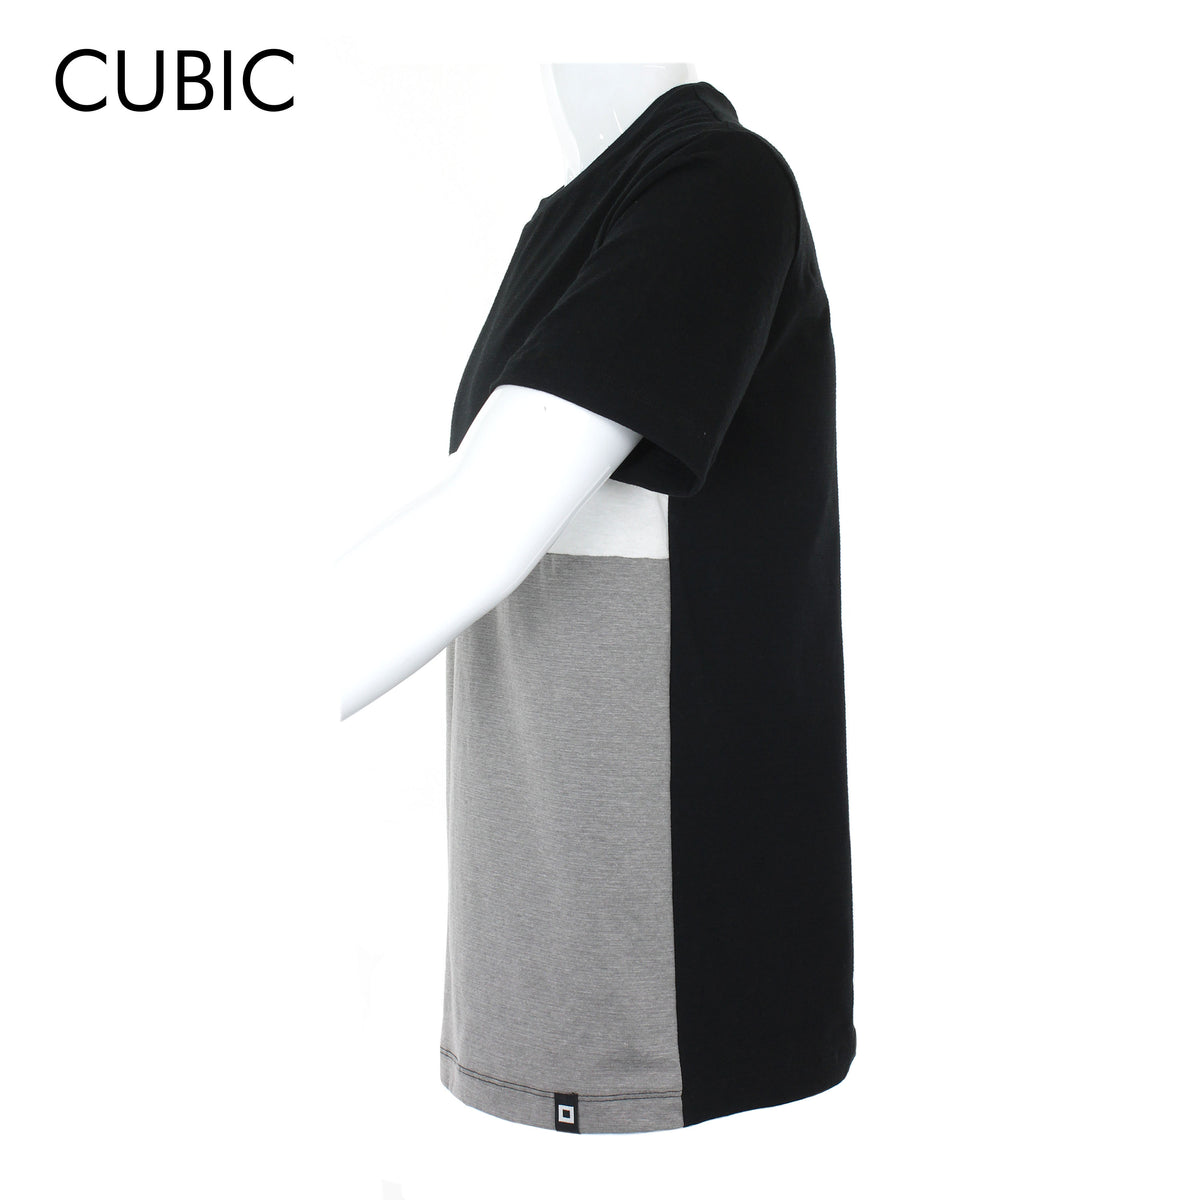 Cubic Men Spandex Round Neck Tees T-shirt Jersey Shirt Top Top for Men - CMJ2345R